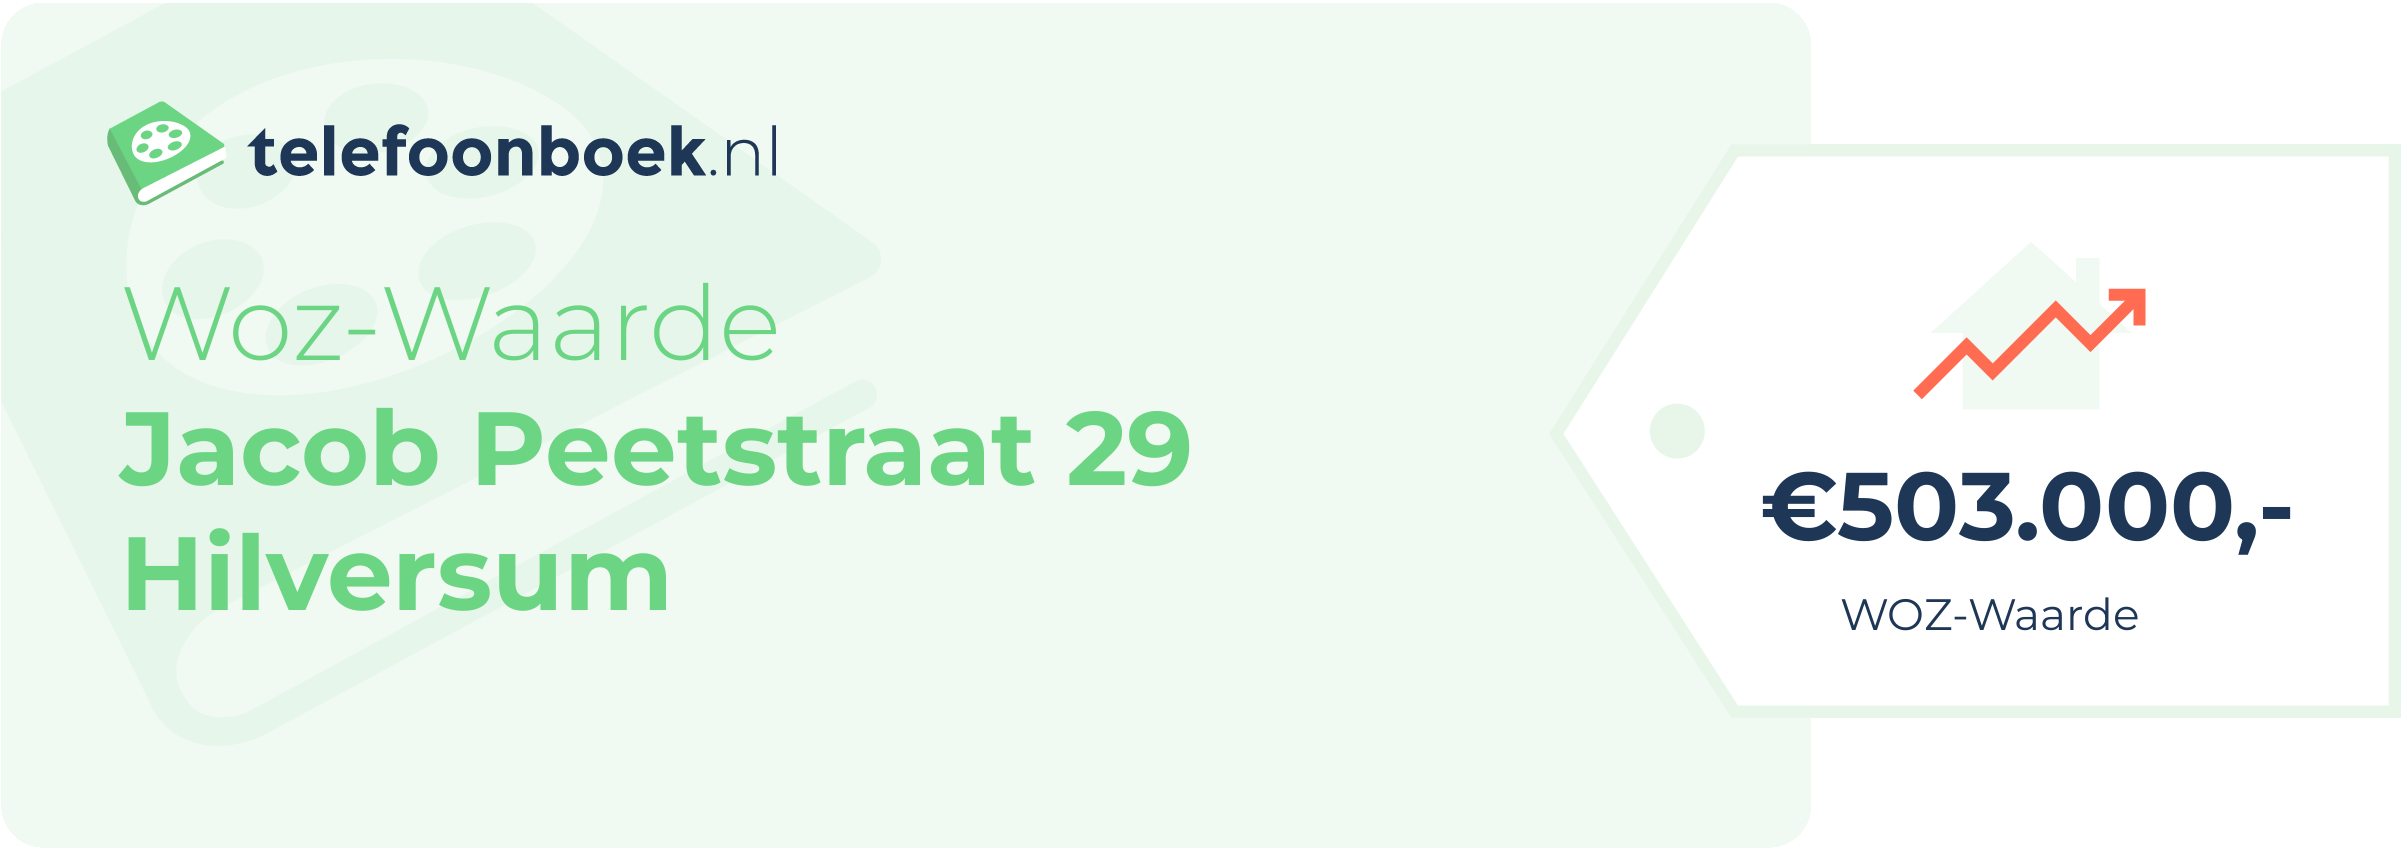 WOZ-waarde Jacob Peetstraat 29 Hilversum